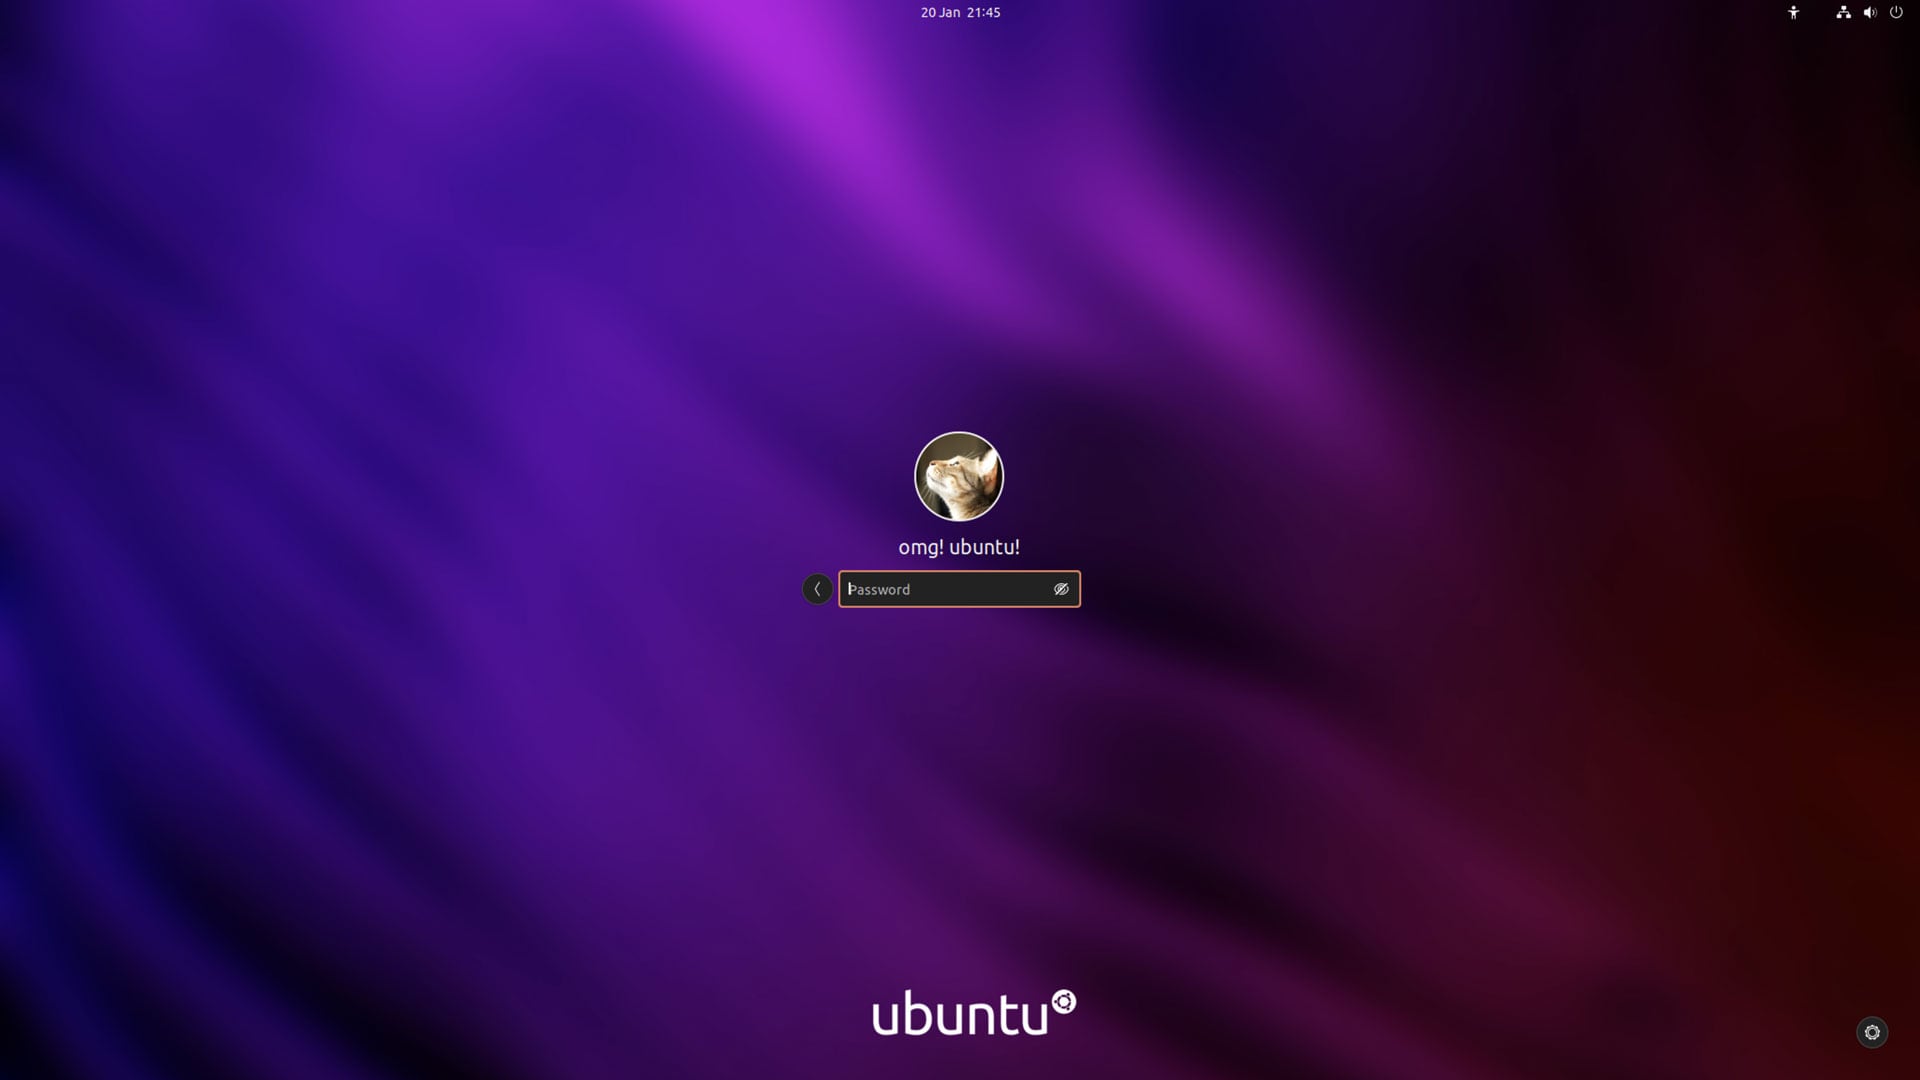 a screenshot of the ubuntu login screen (GDM) using another custom image